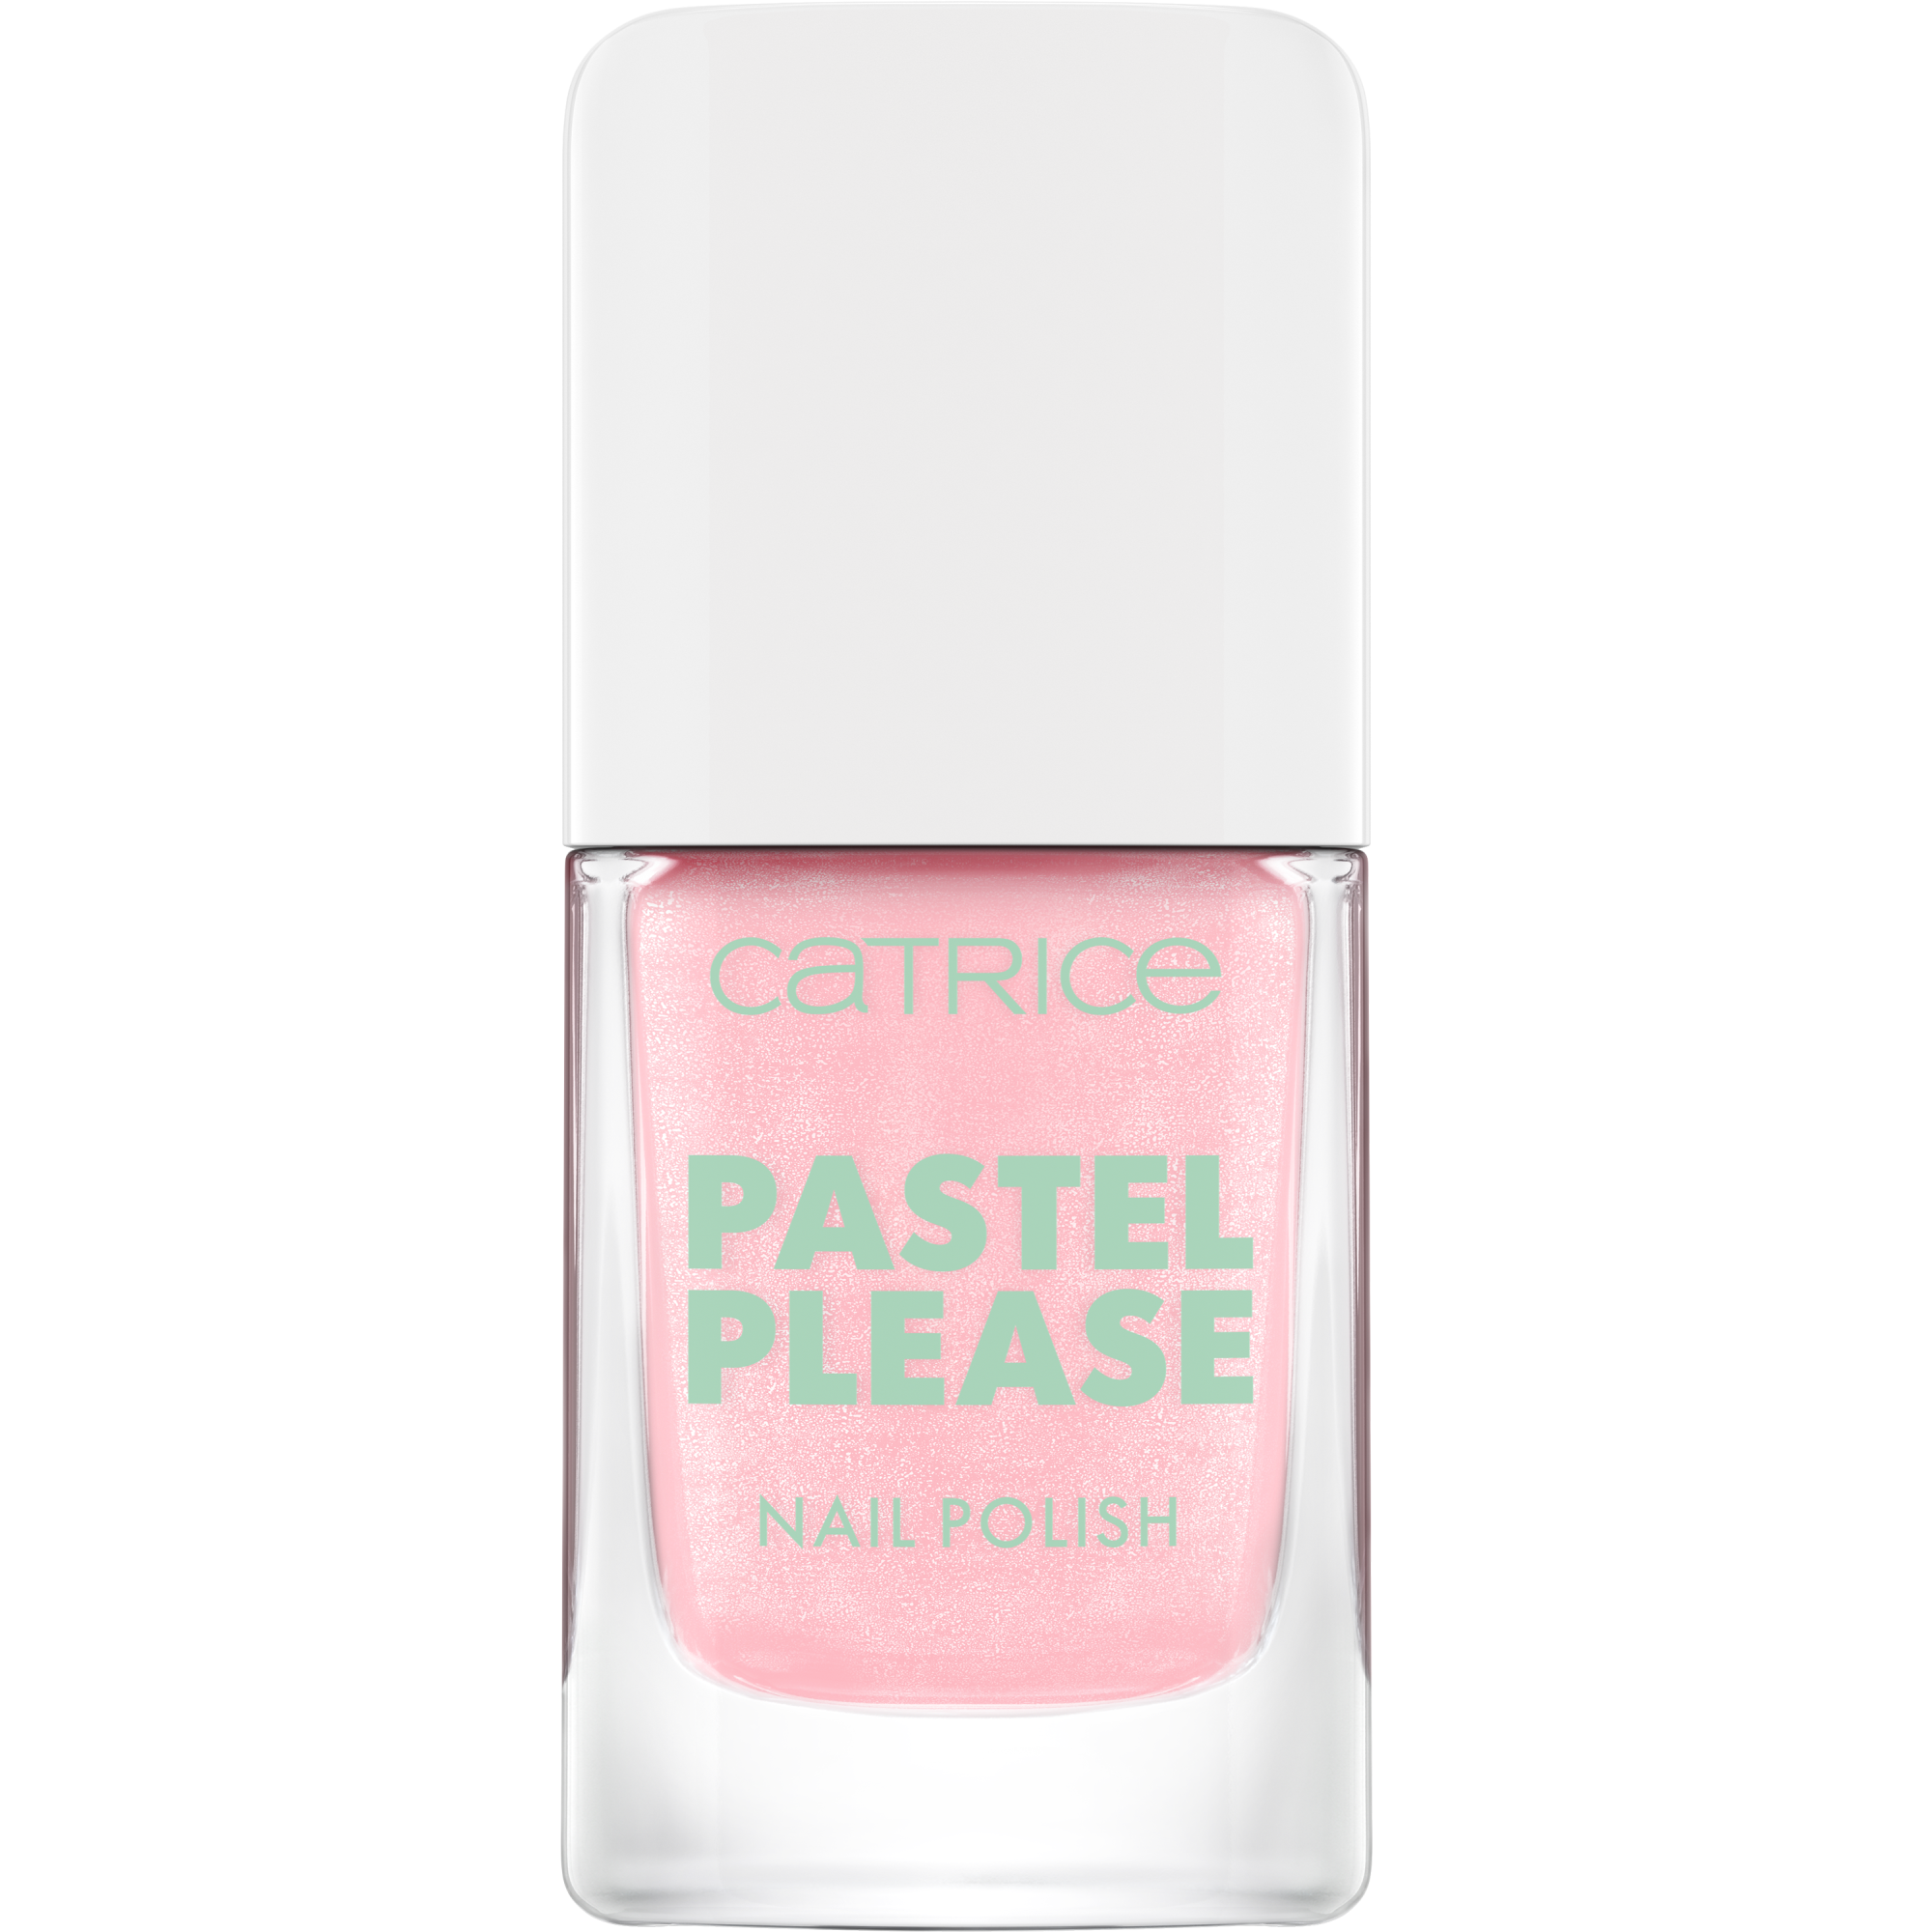 Pastel Please Nail Polish